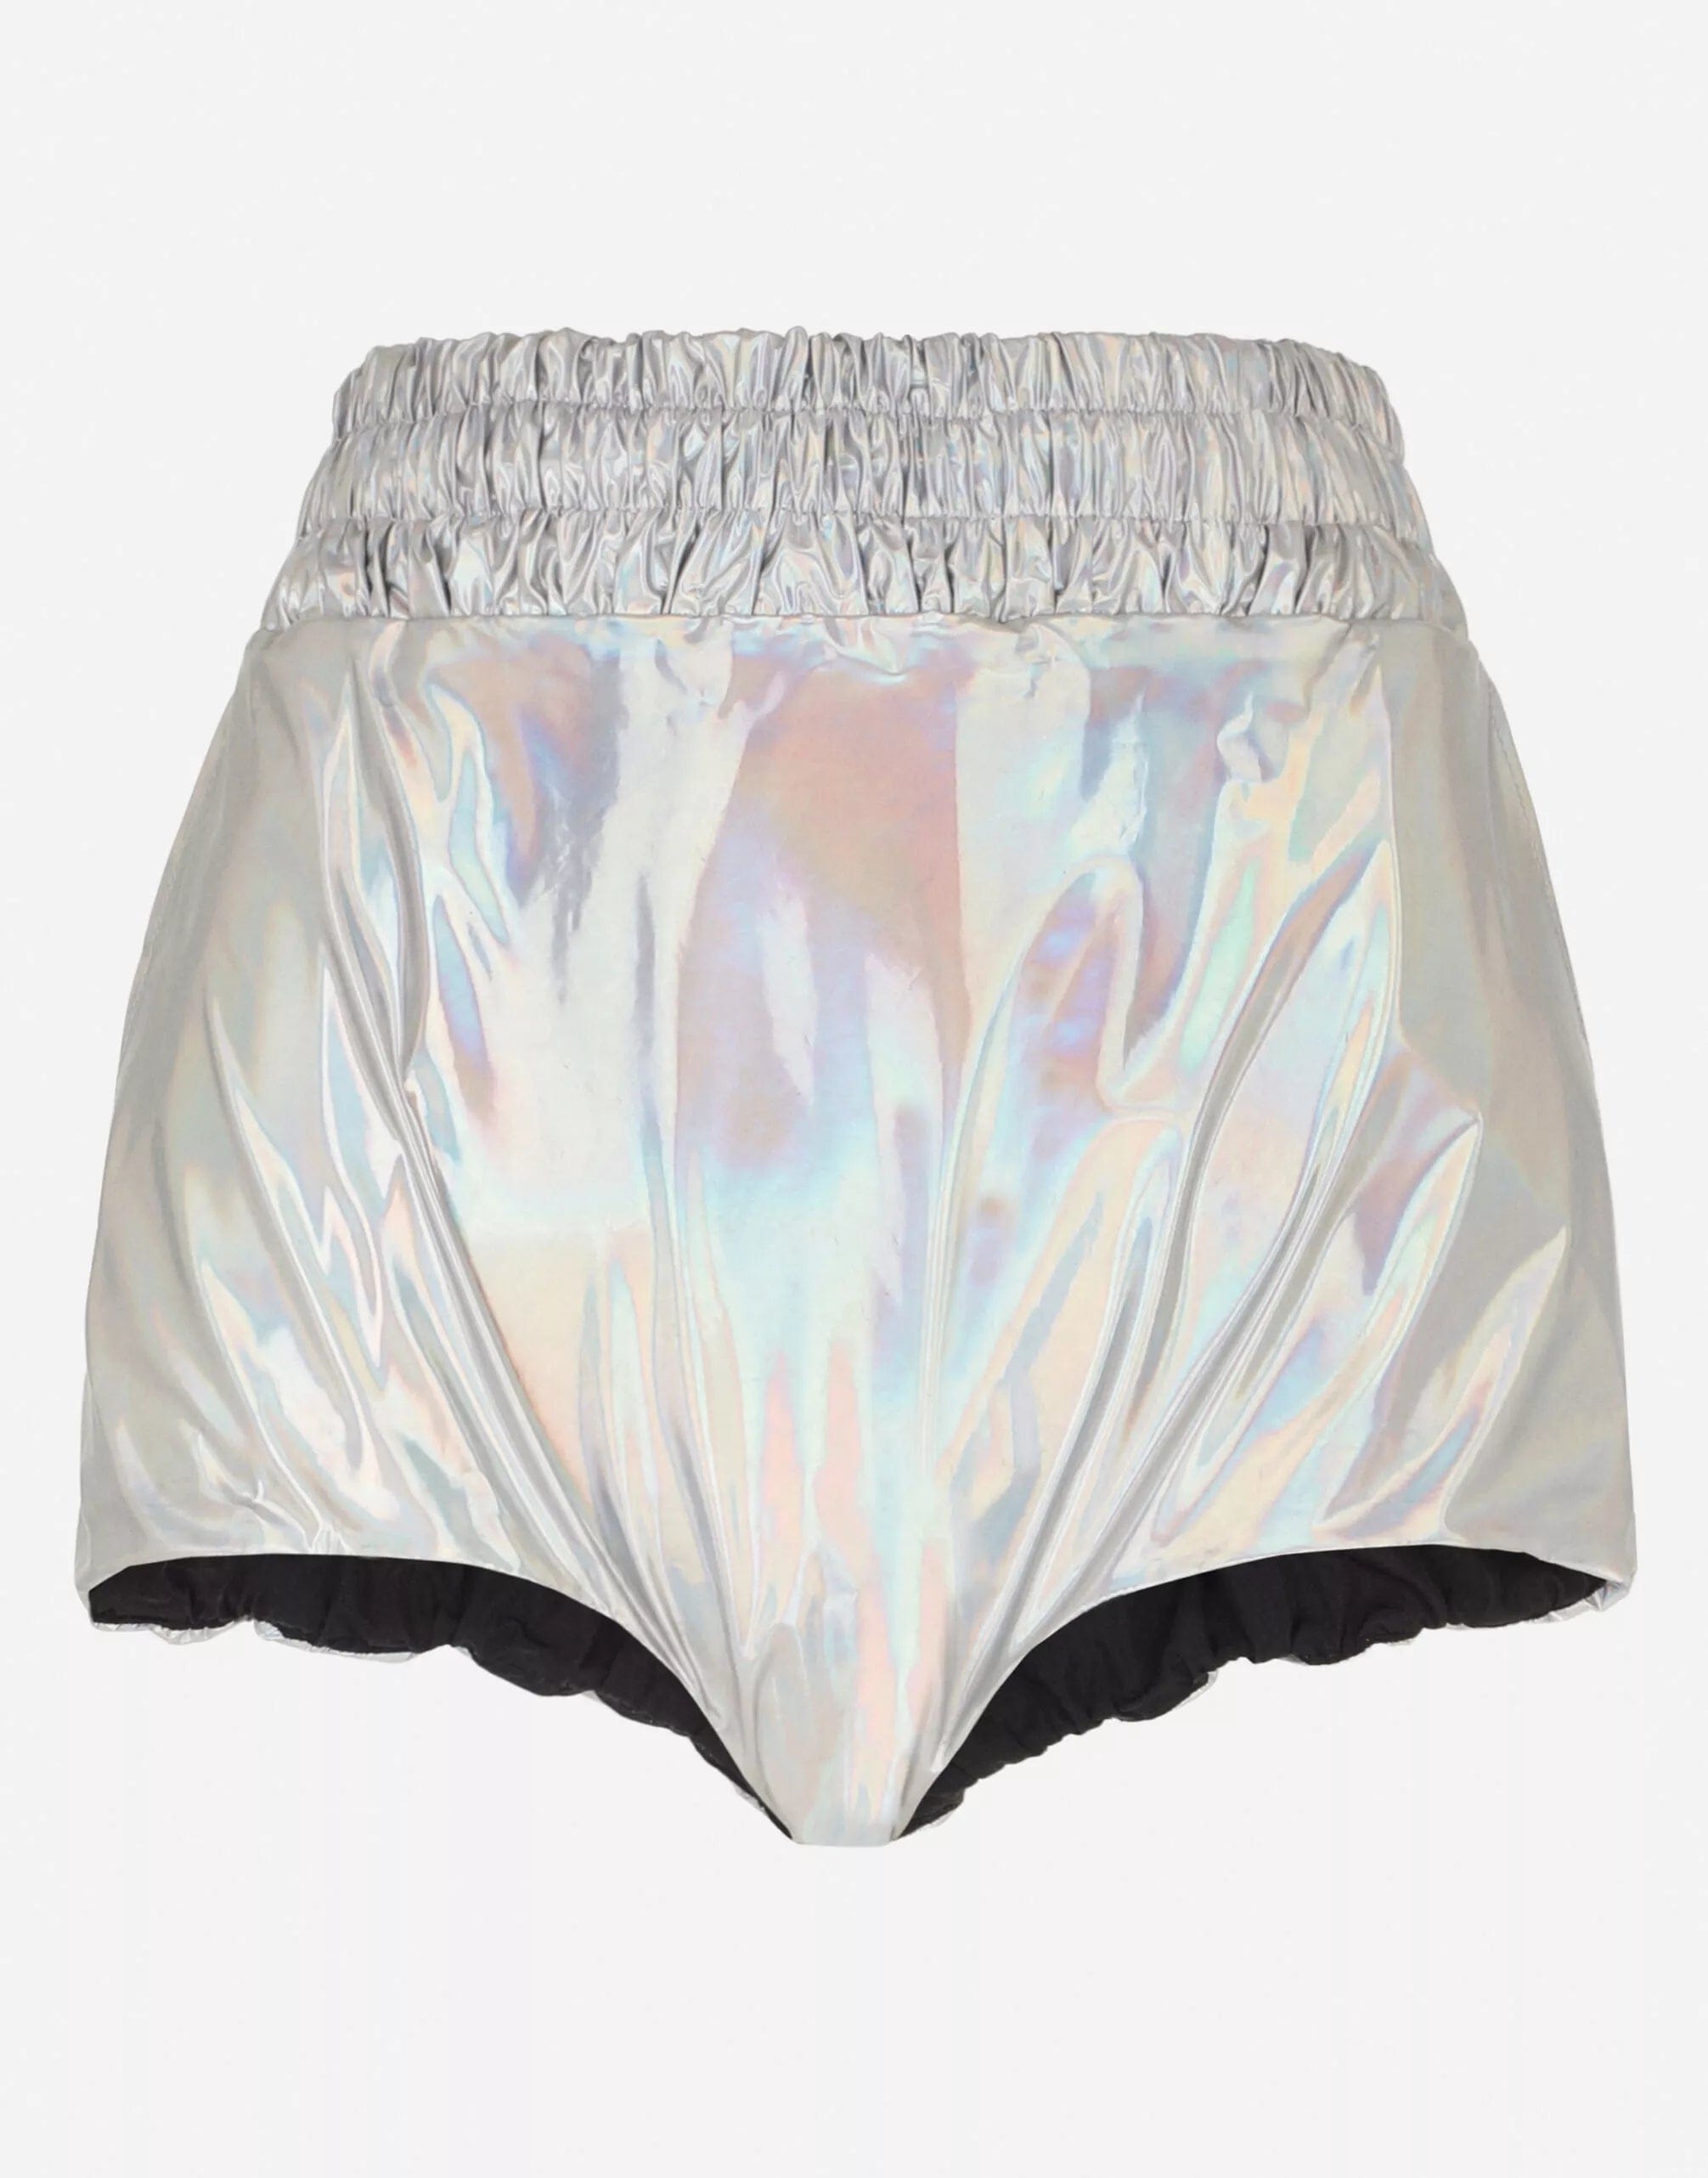 Dolce & Gabbana Silver Holographic High Waist Hot Pants Shorts